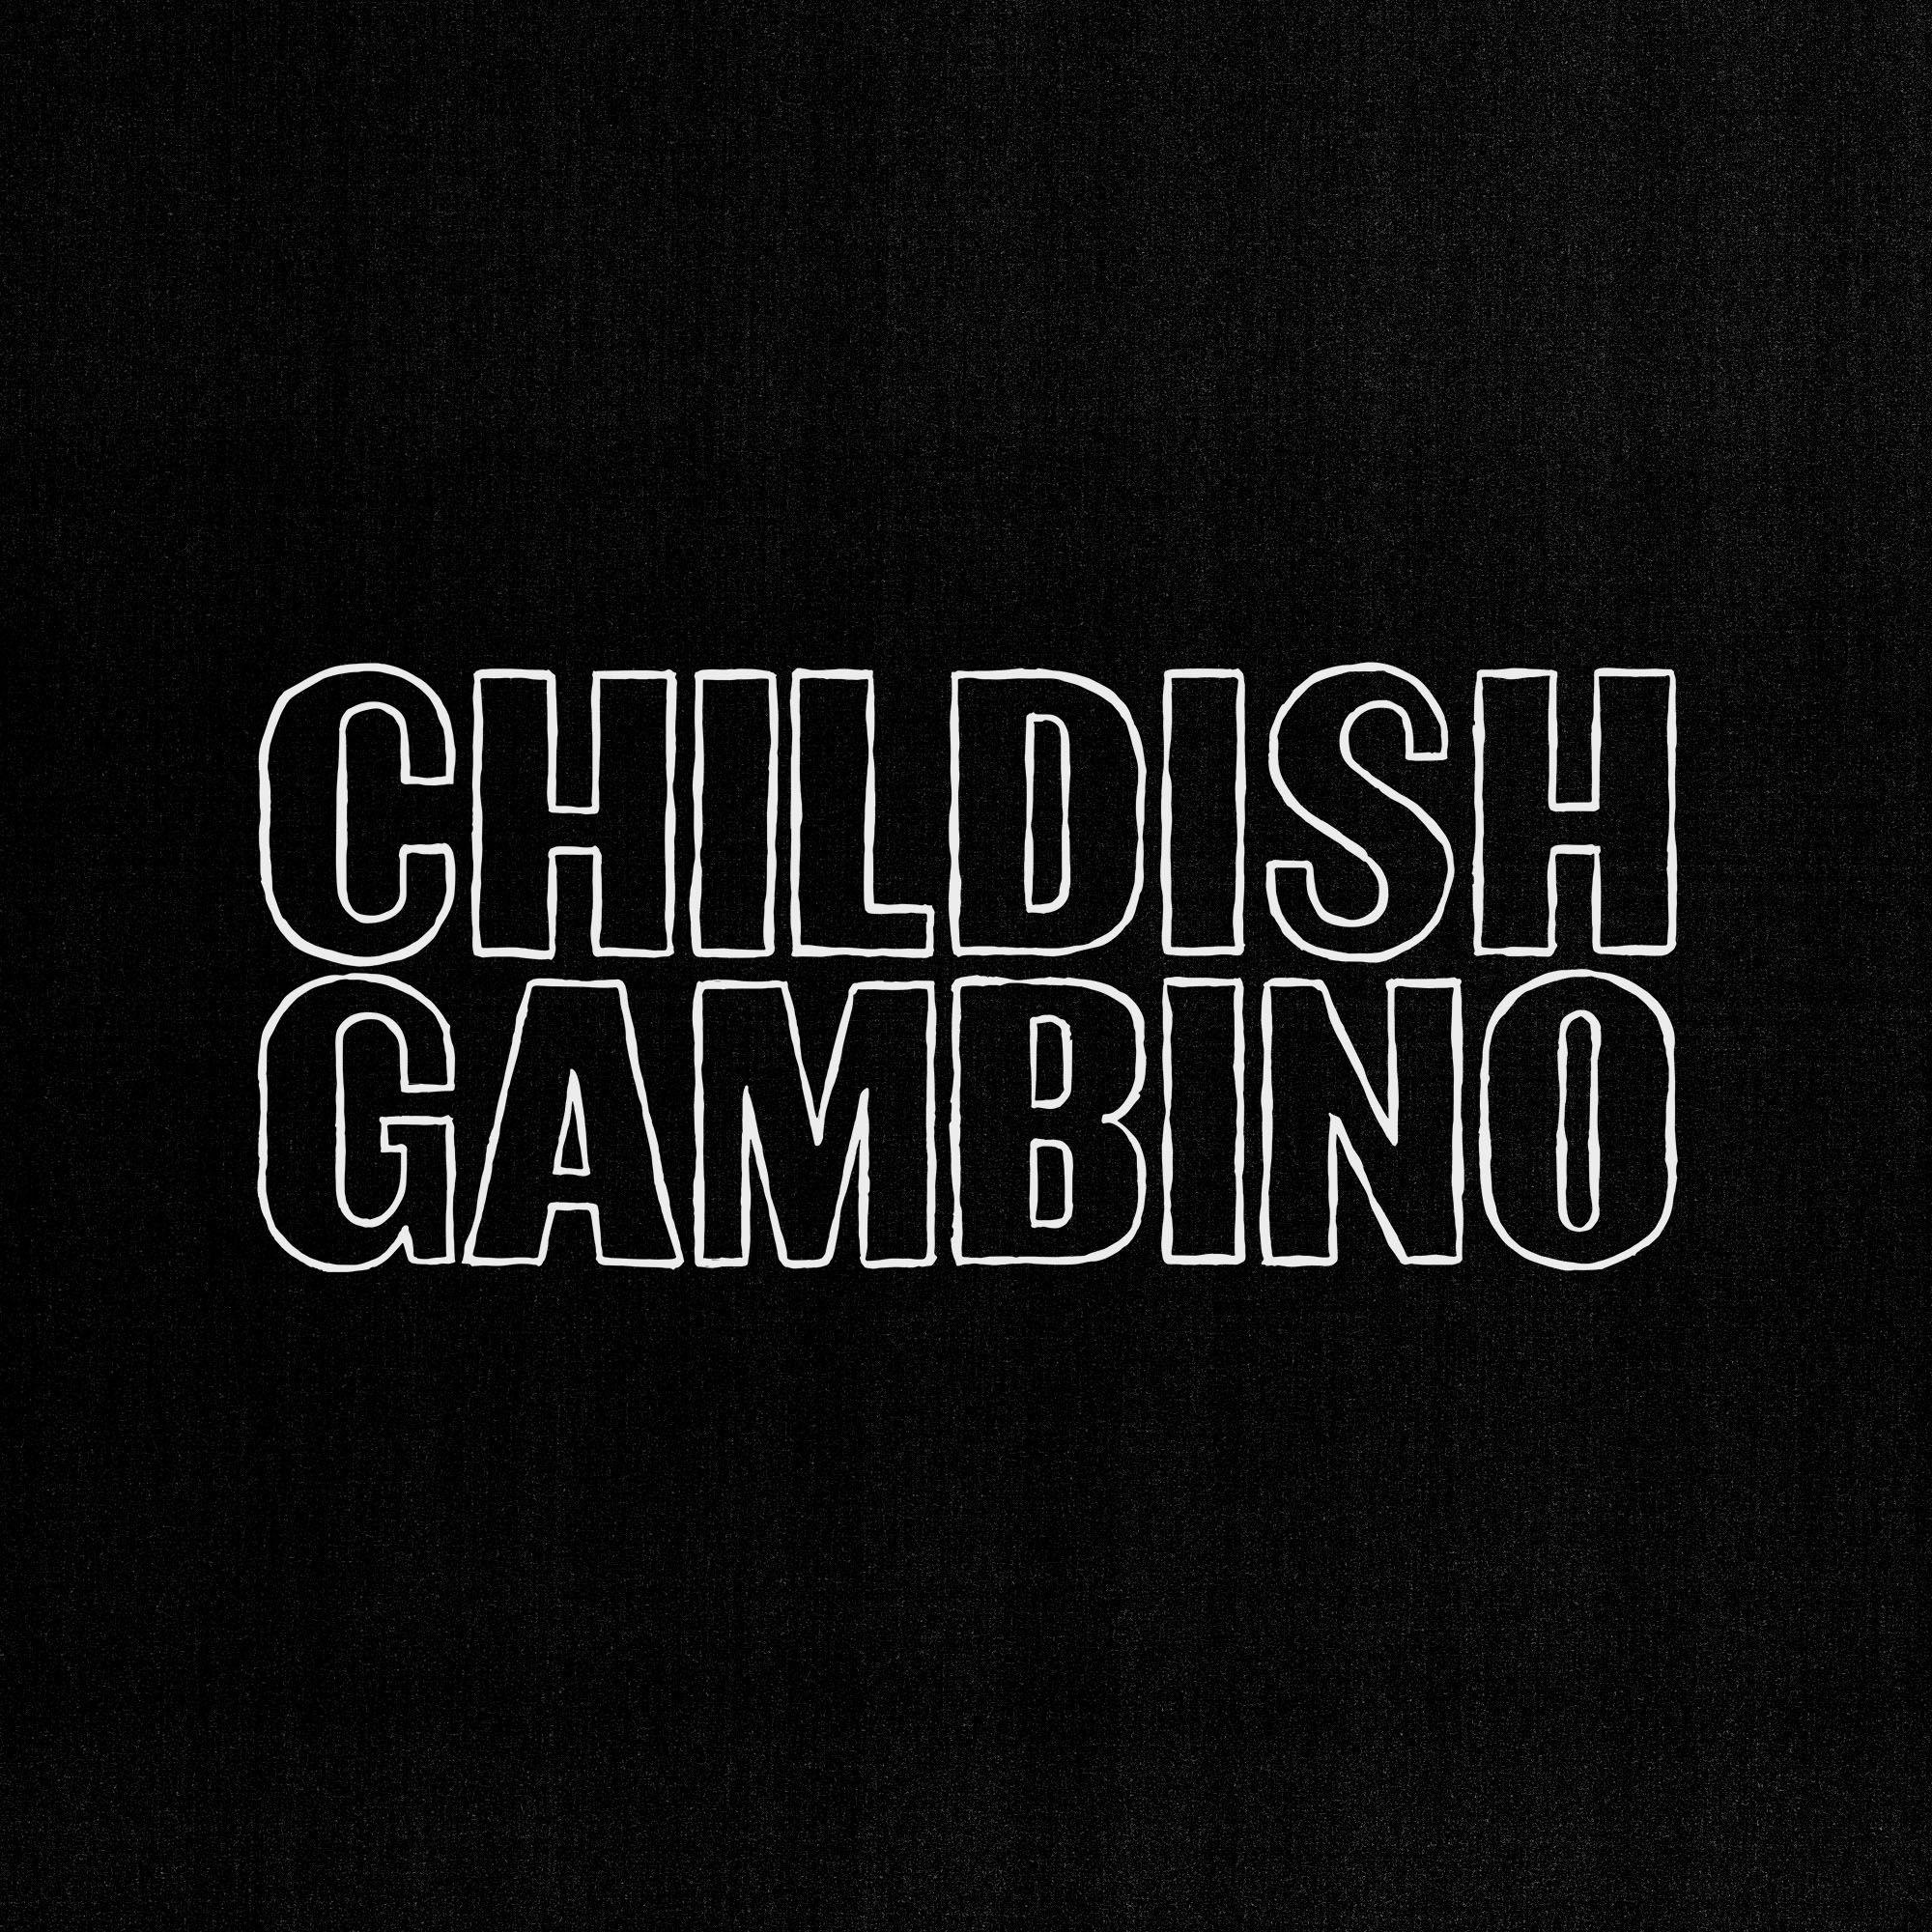 Childish Gambino Logo - Official new logo by french artist Tyrsa : donaldglover